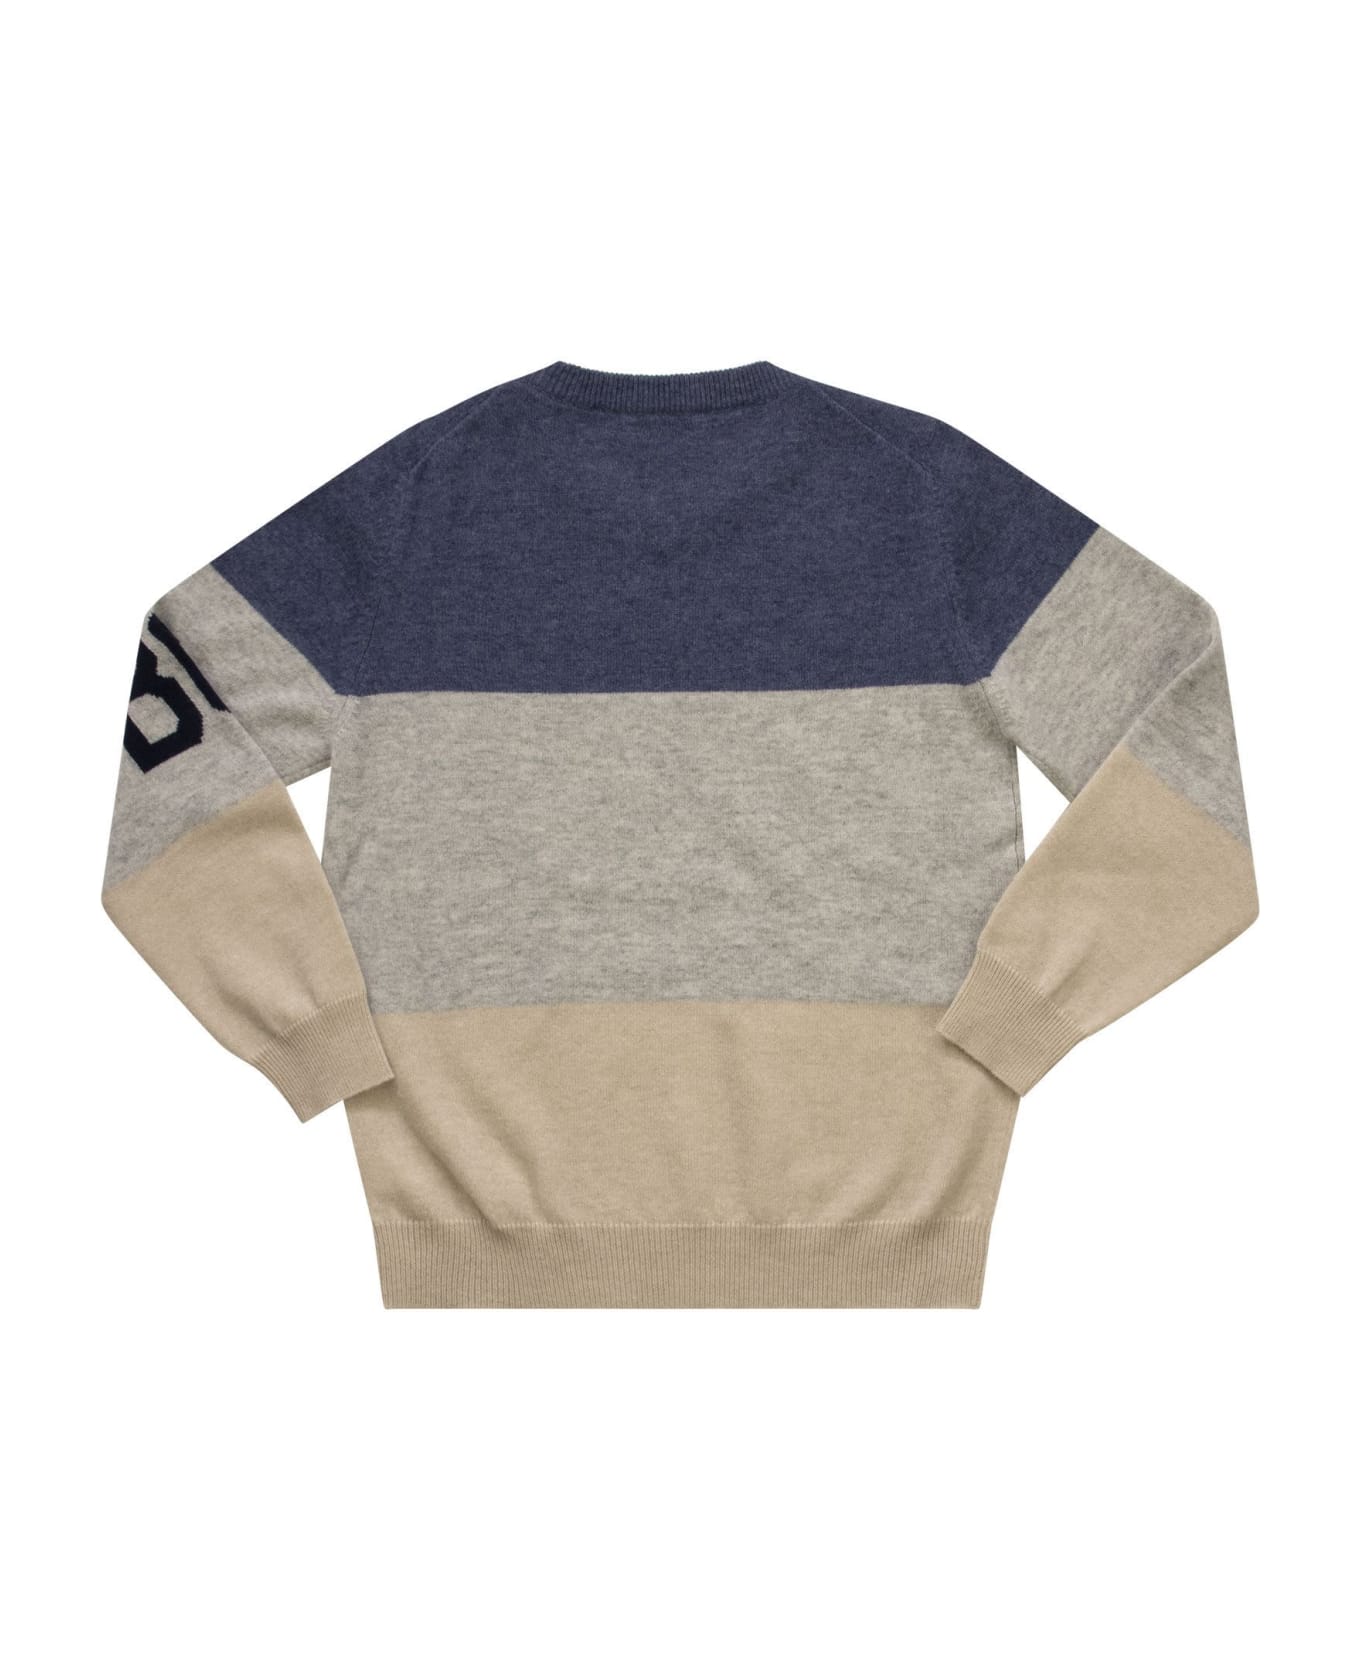 Brunello Cucinelli Cashmere Crew-neck Sweater - Blue/grey/sand